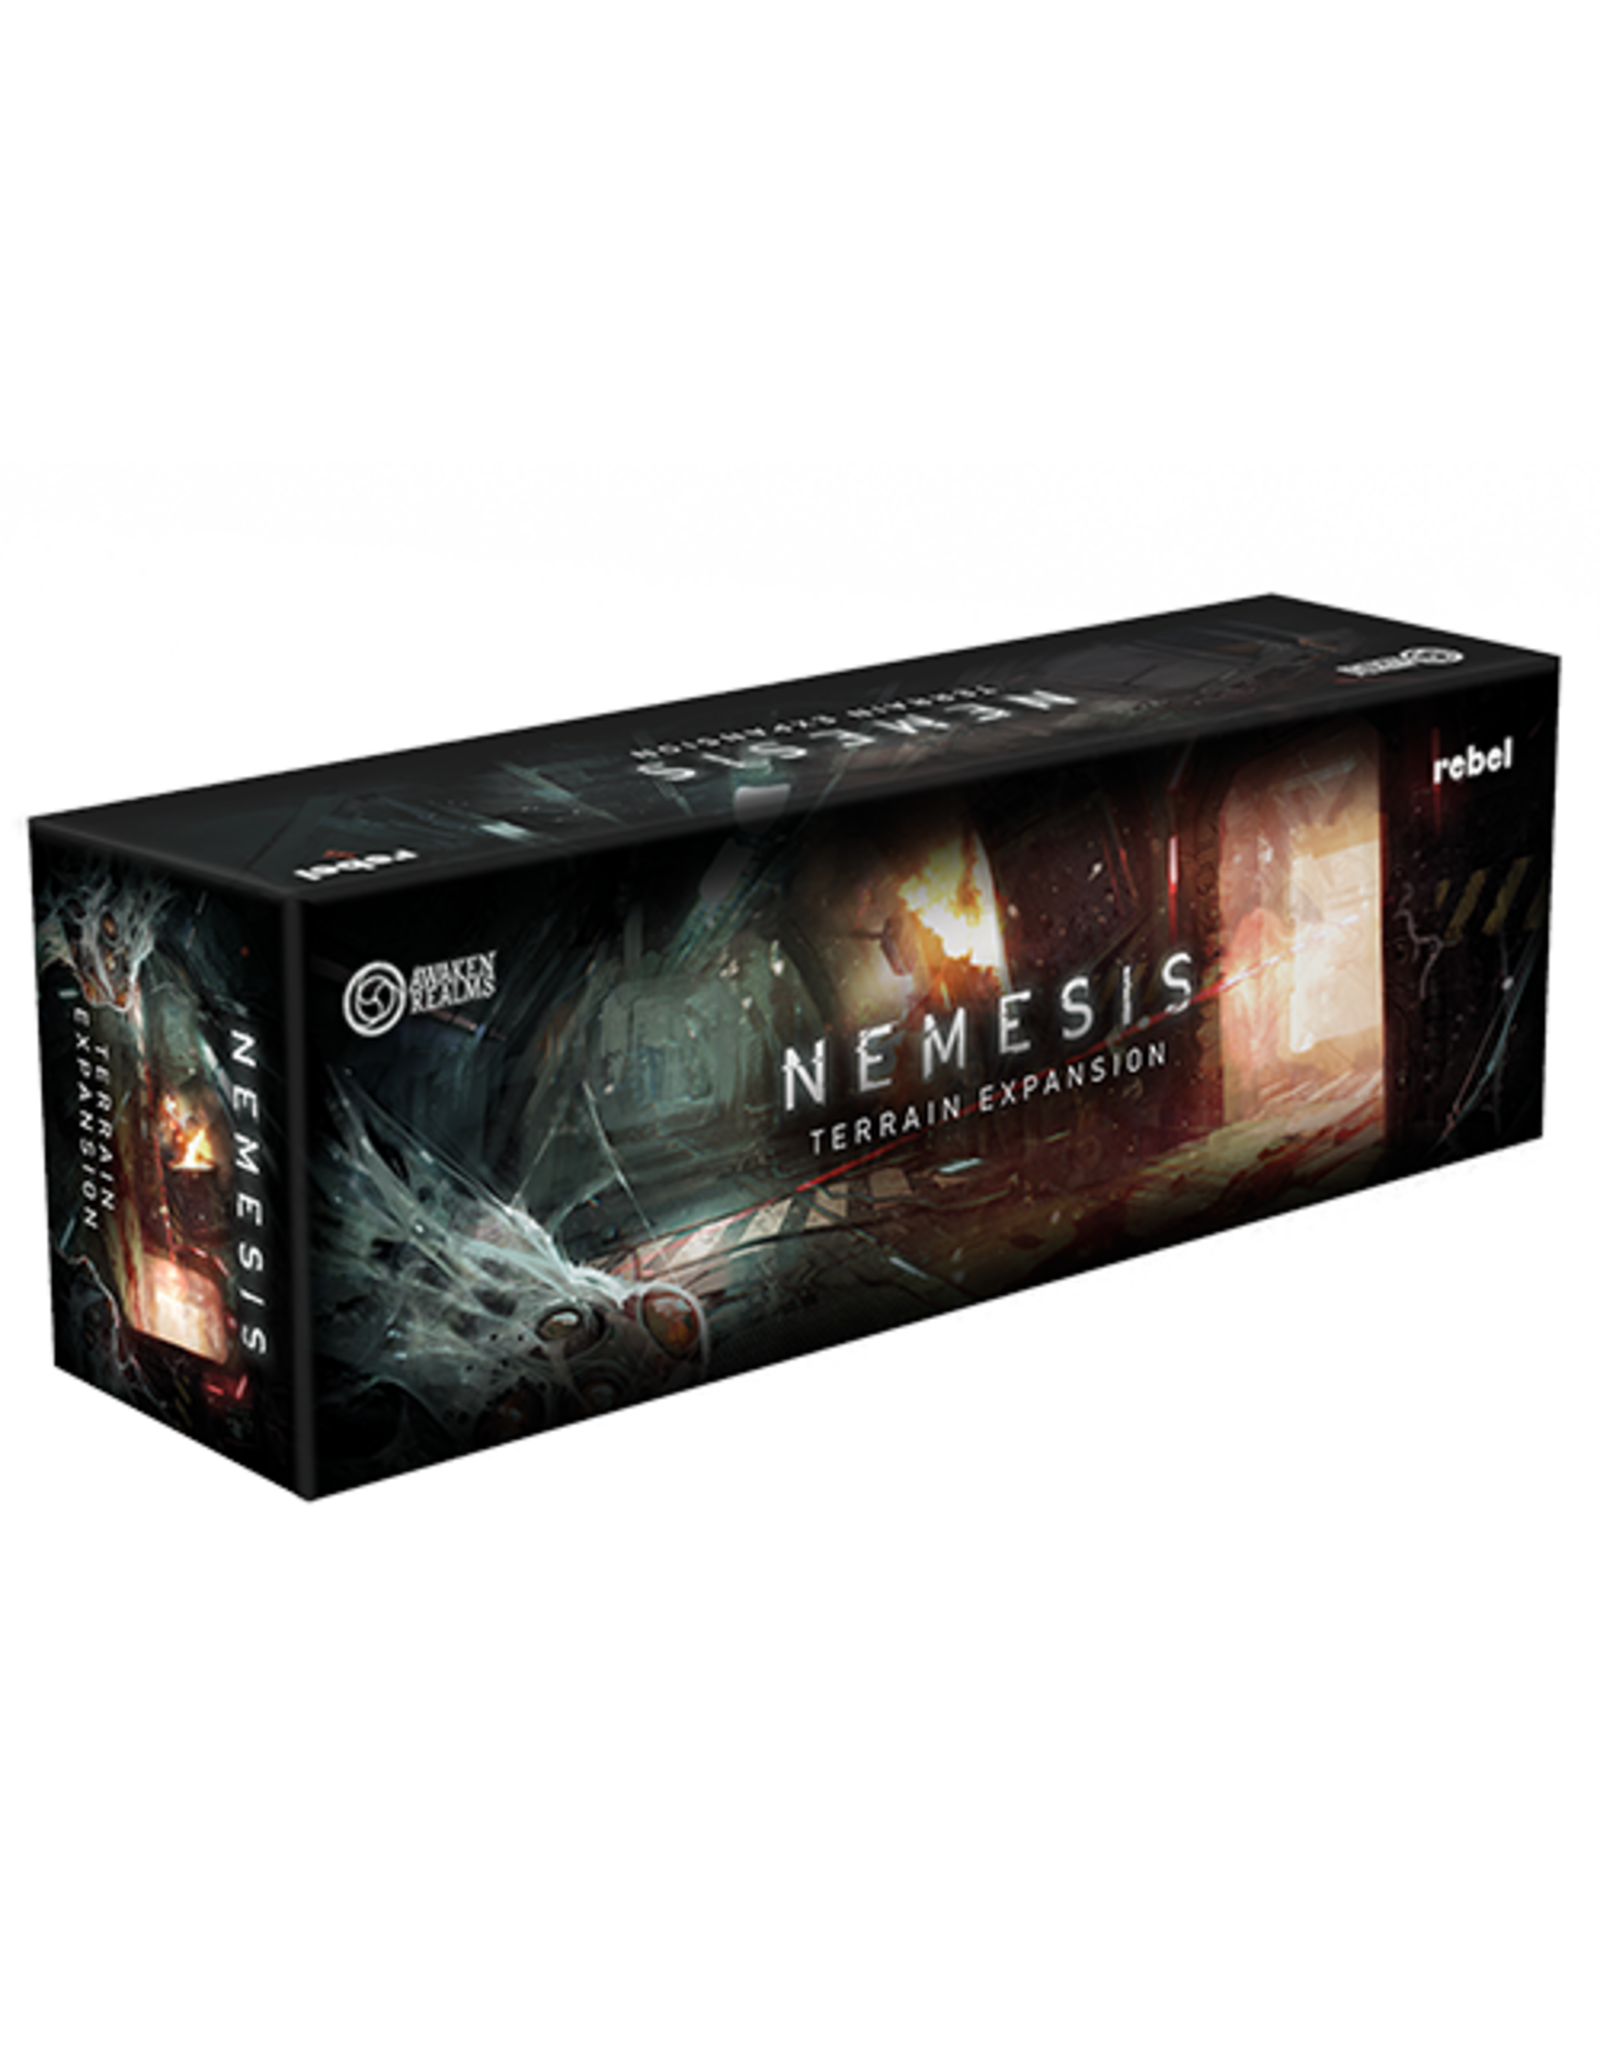 Rebel Nemesis: Terrain Pack Expansion